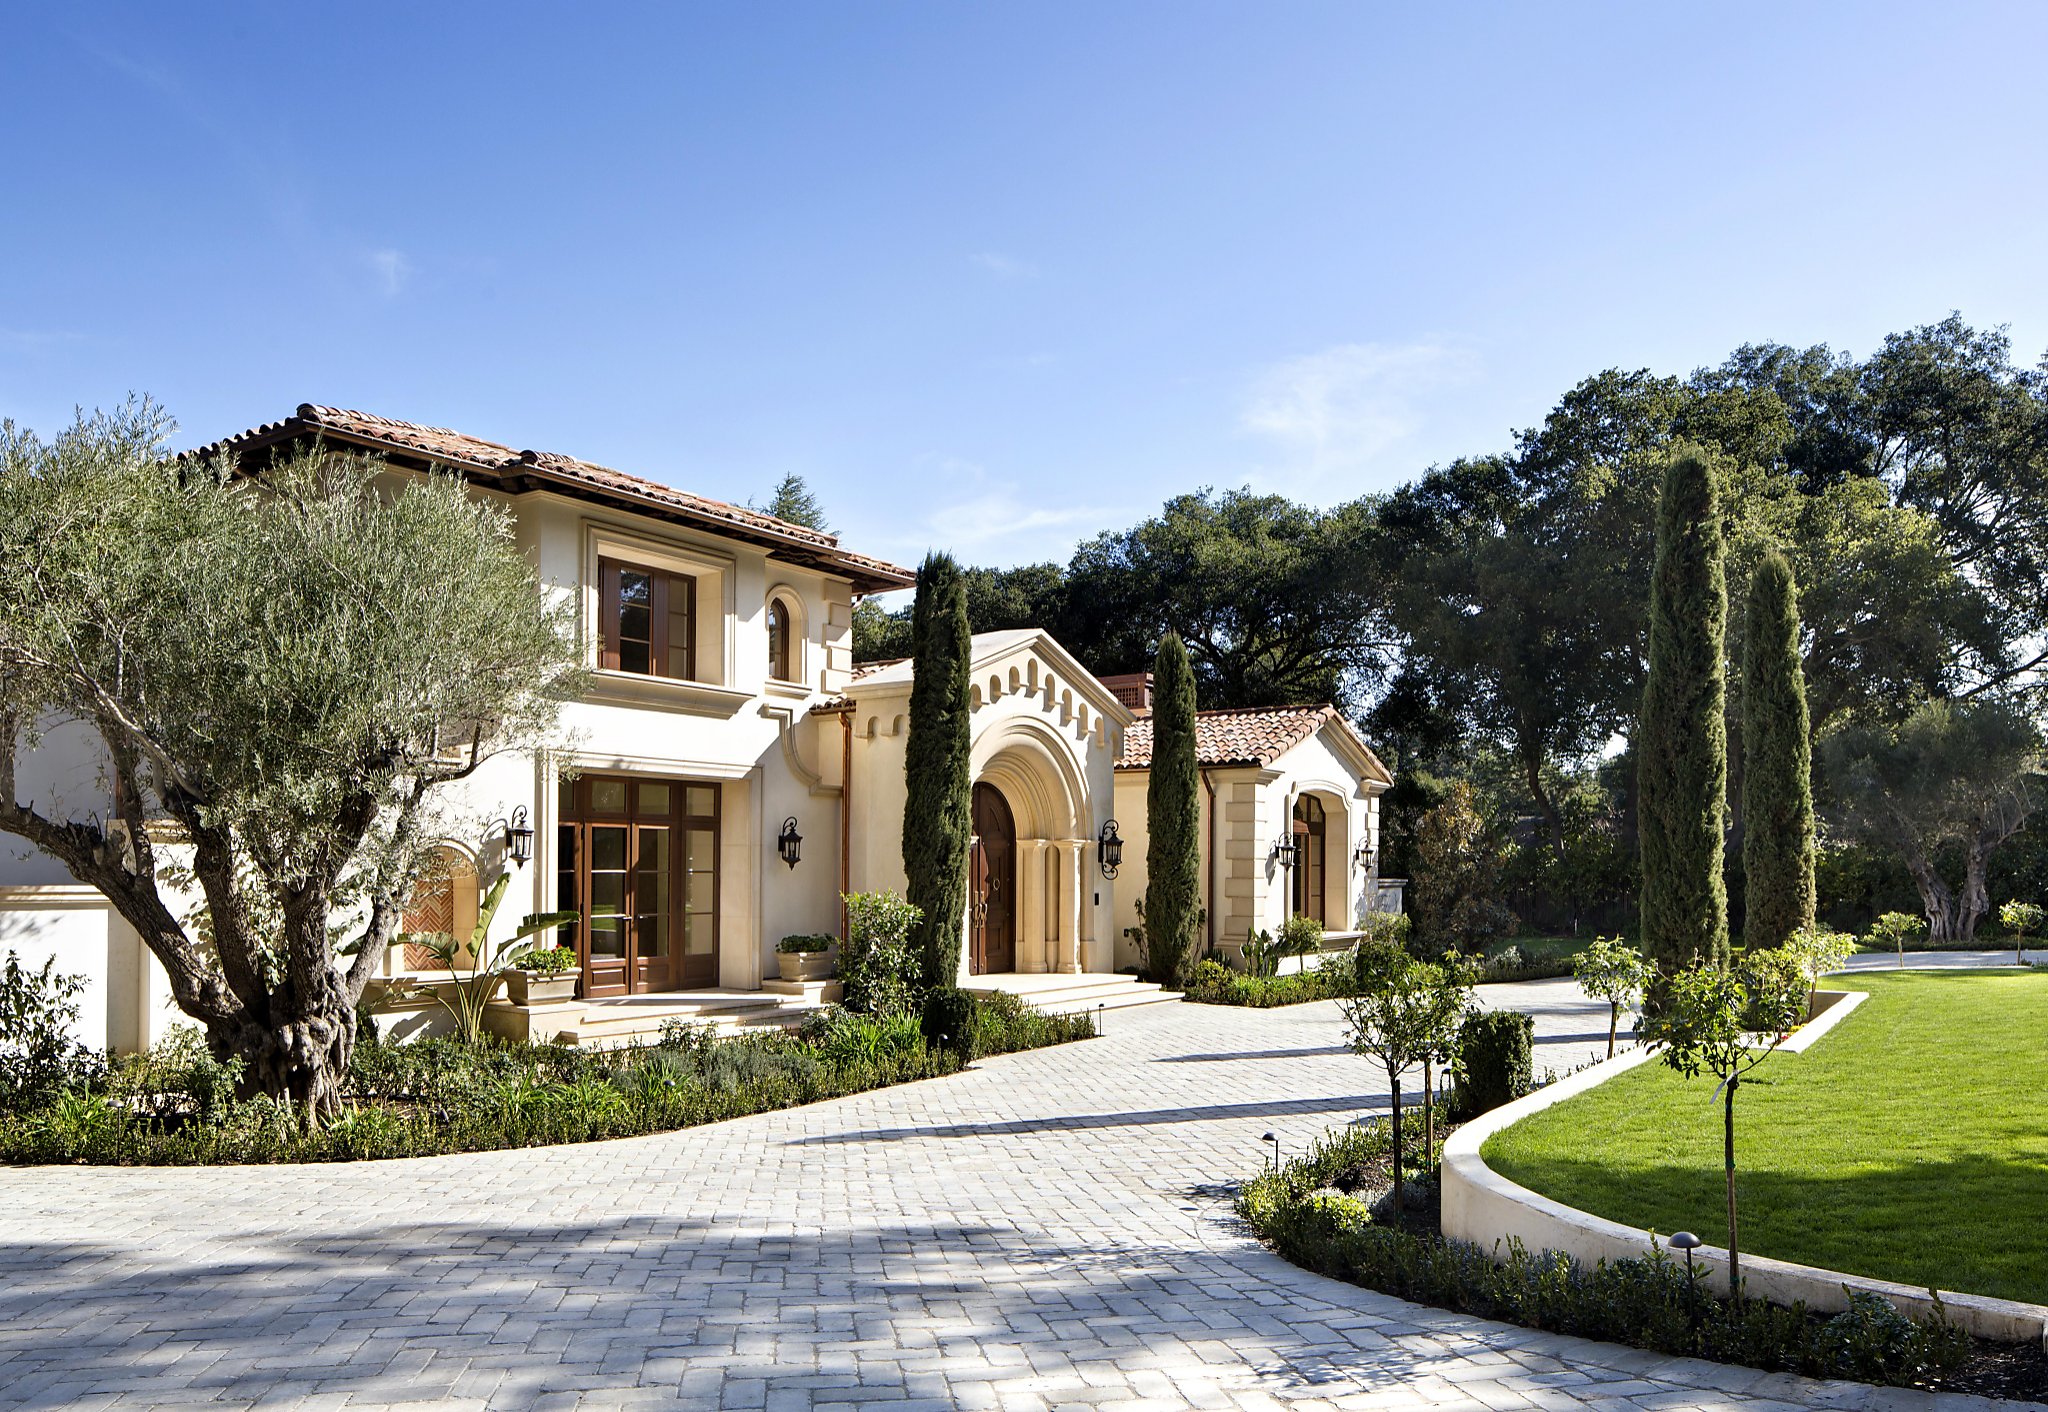 Italian Villa In Atherton Offers Taste Of The Past Glimpse Of The Future